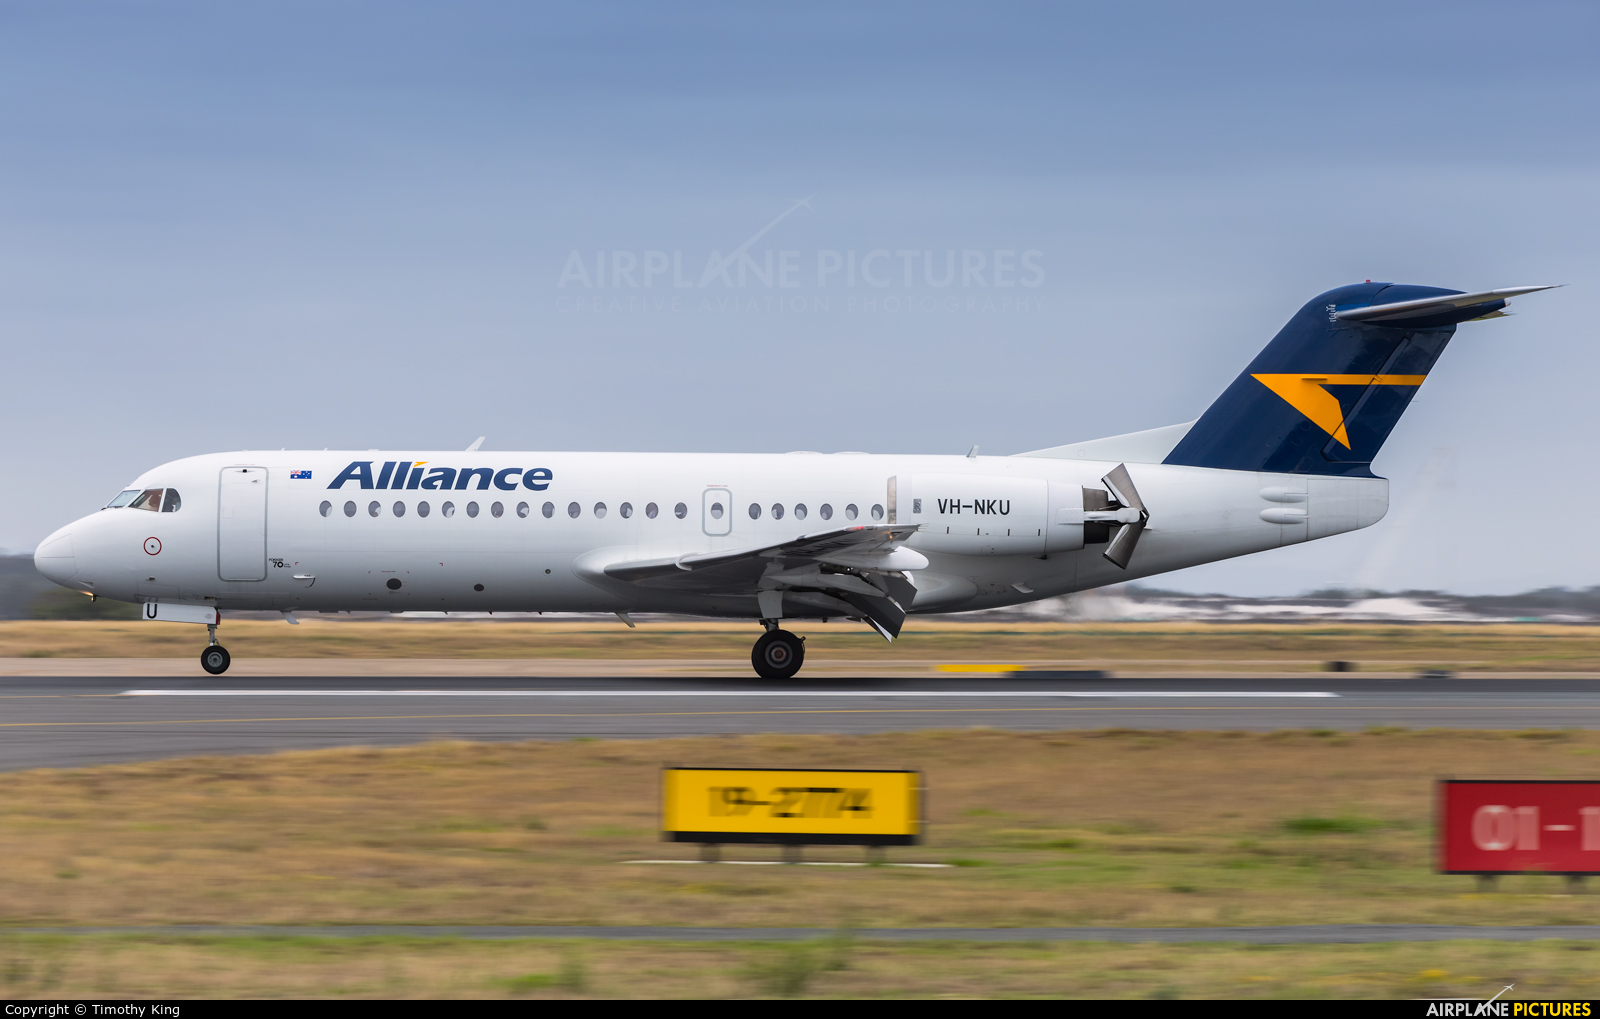 Alliance Airlines VH-NKU aircraft at Brisbane, QLD